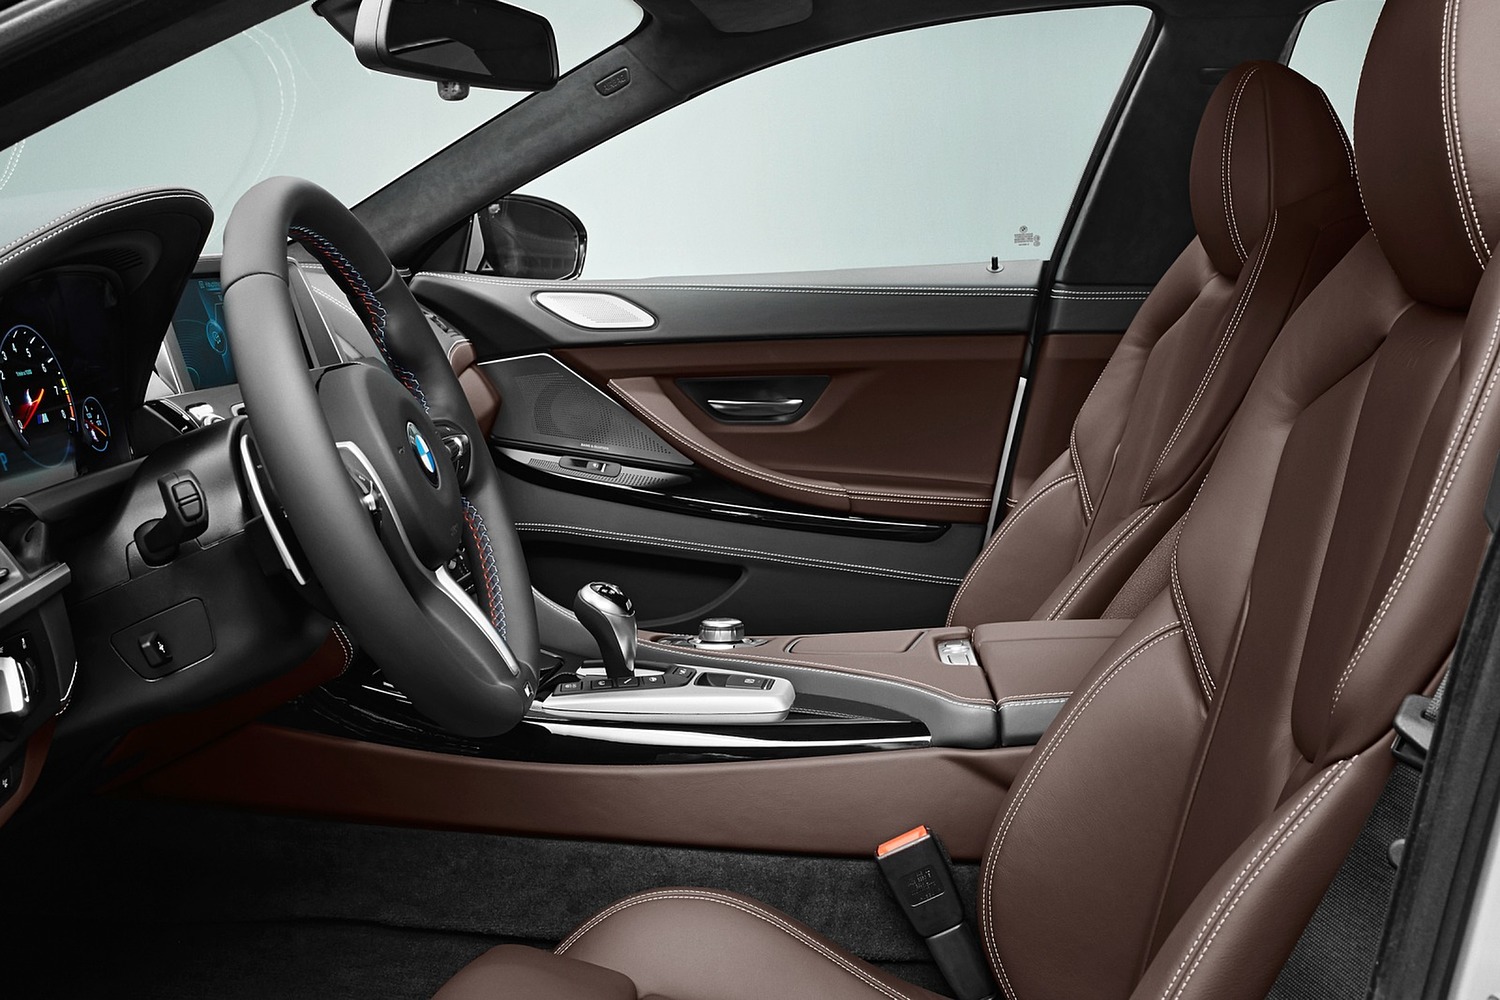 BMW M6 Gran Coupe Sedan Interior (2017 model year shown)